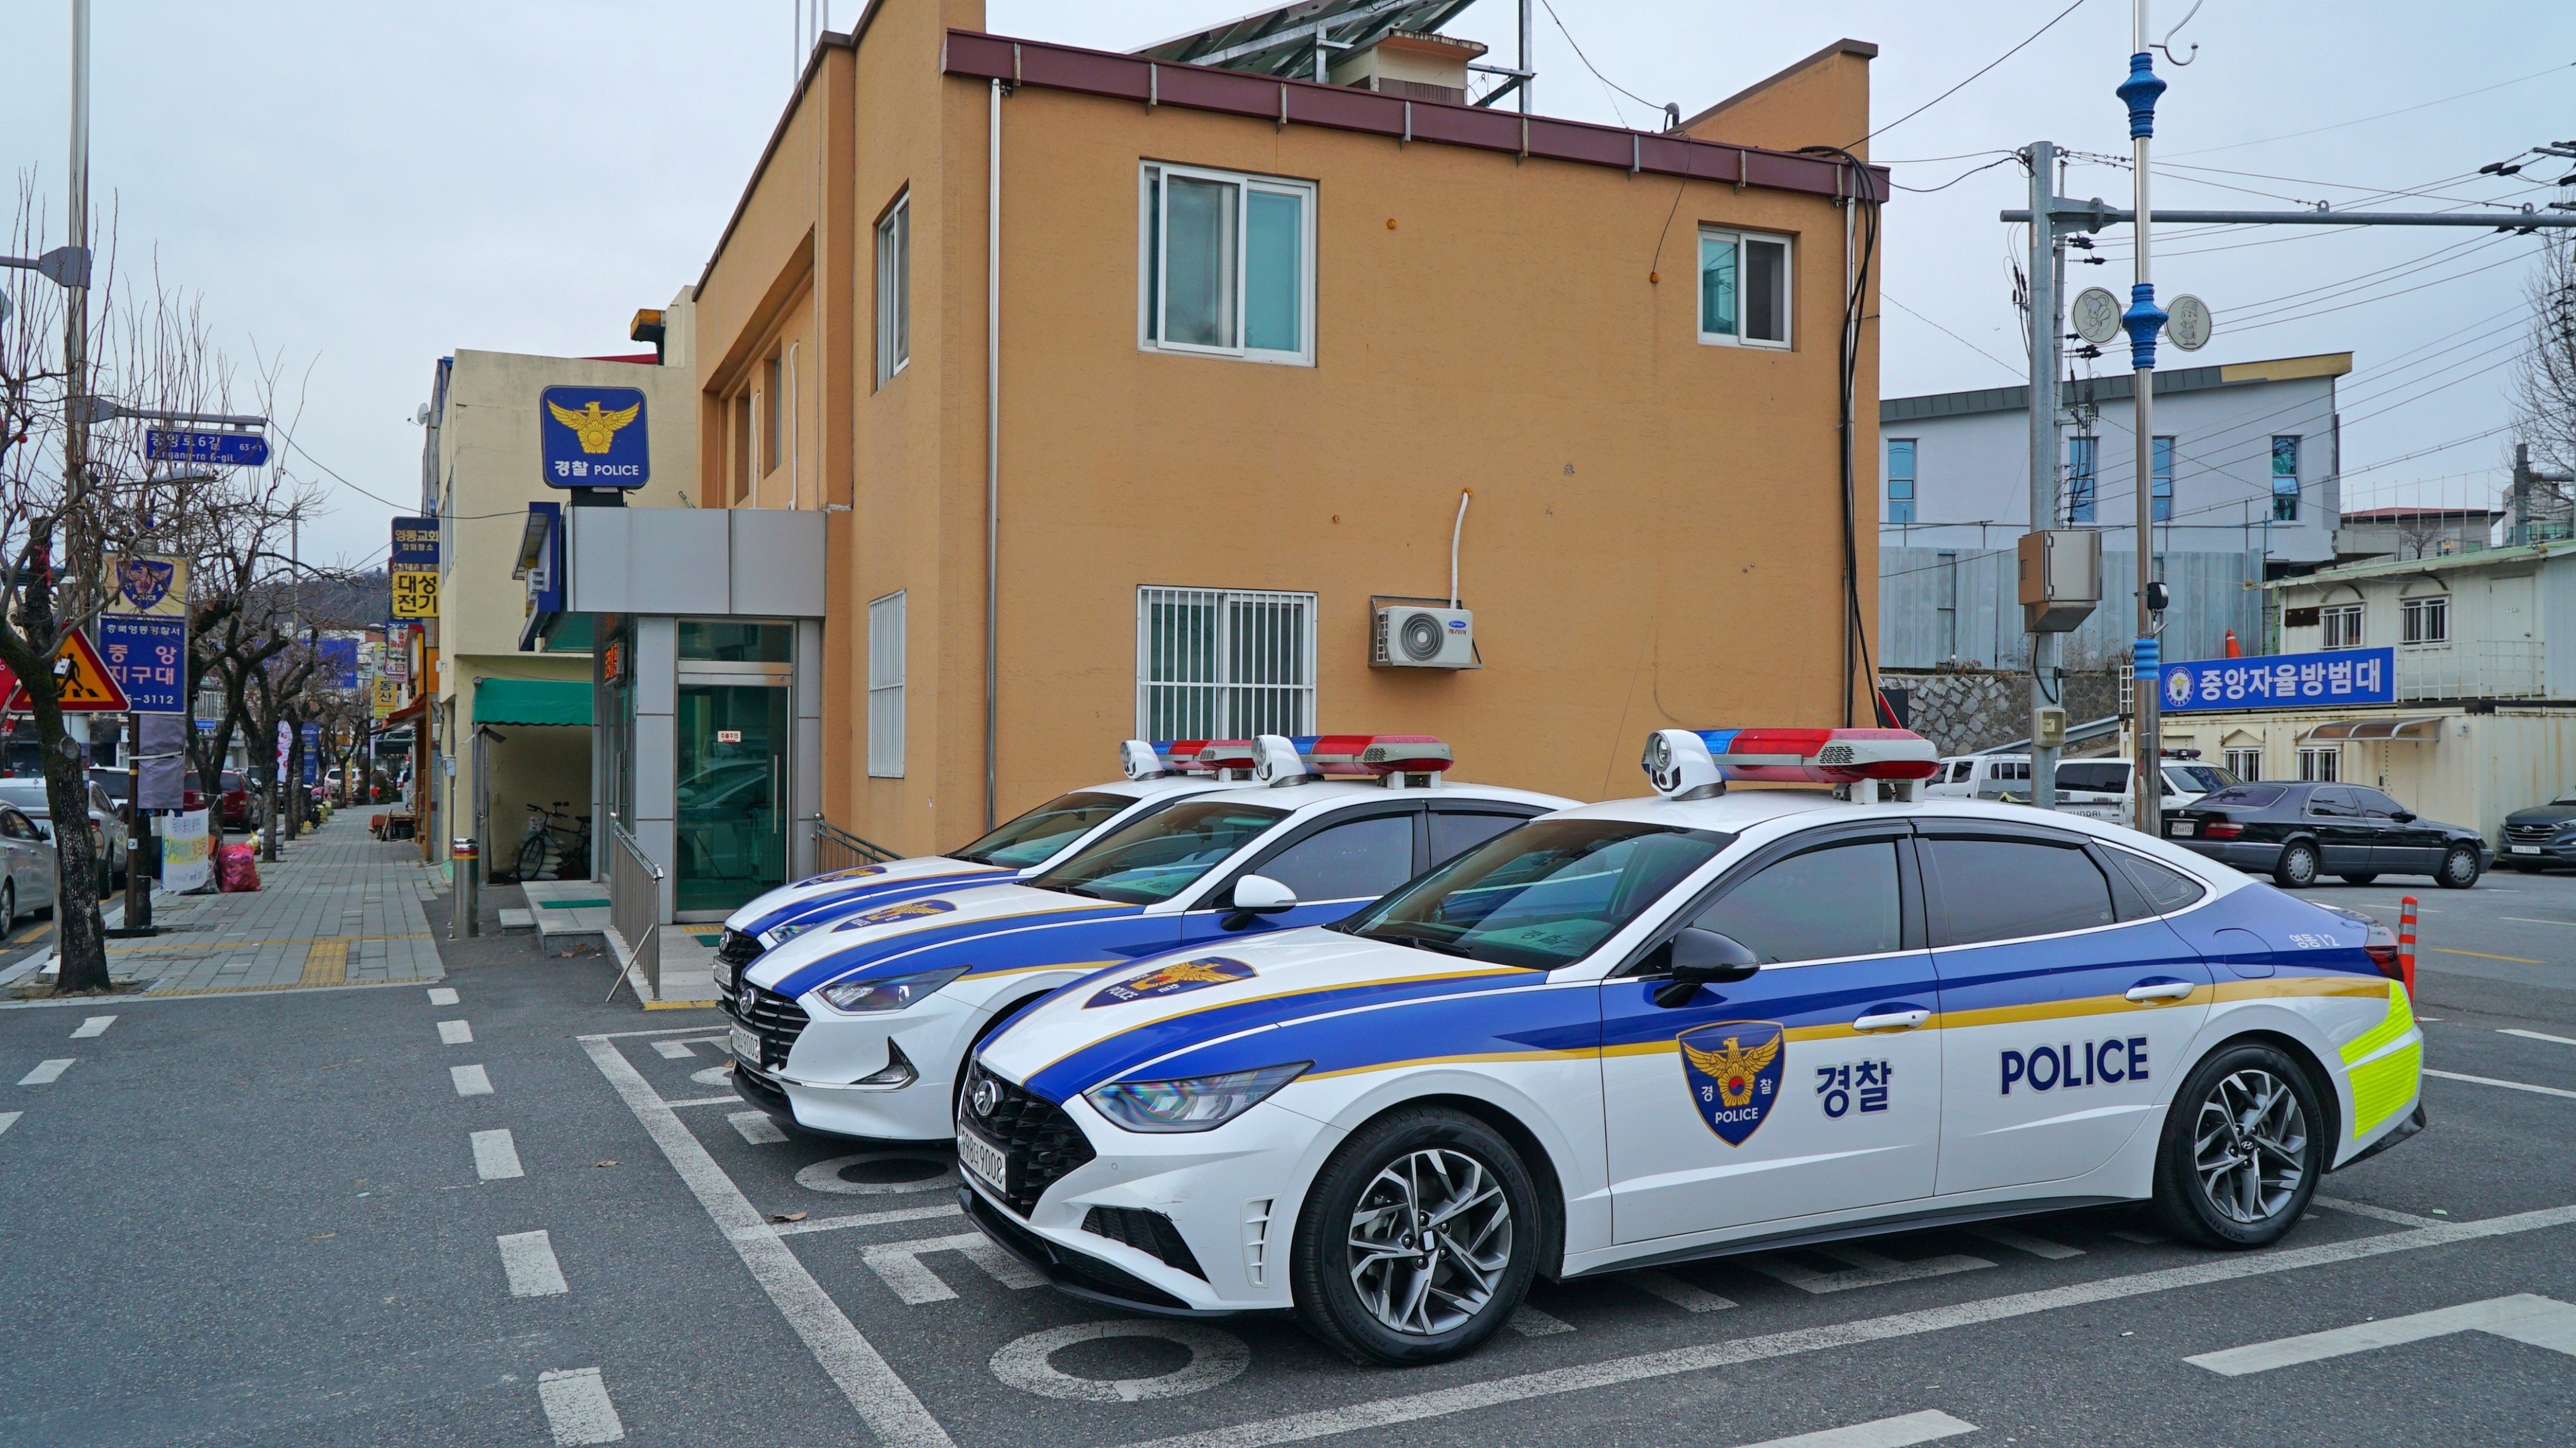 Police cars in South Korea. Photo: Shutterstock 